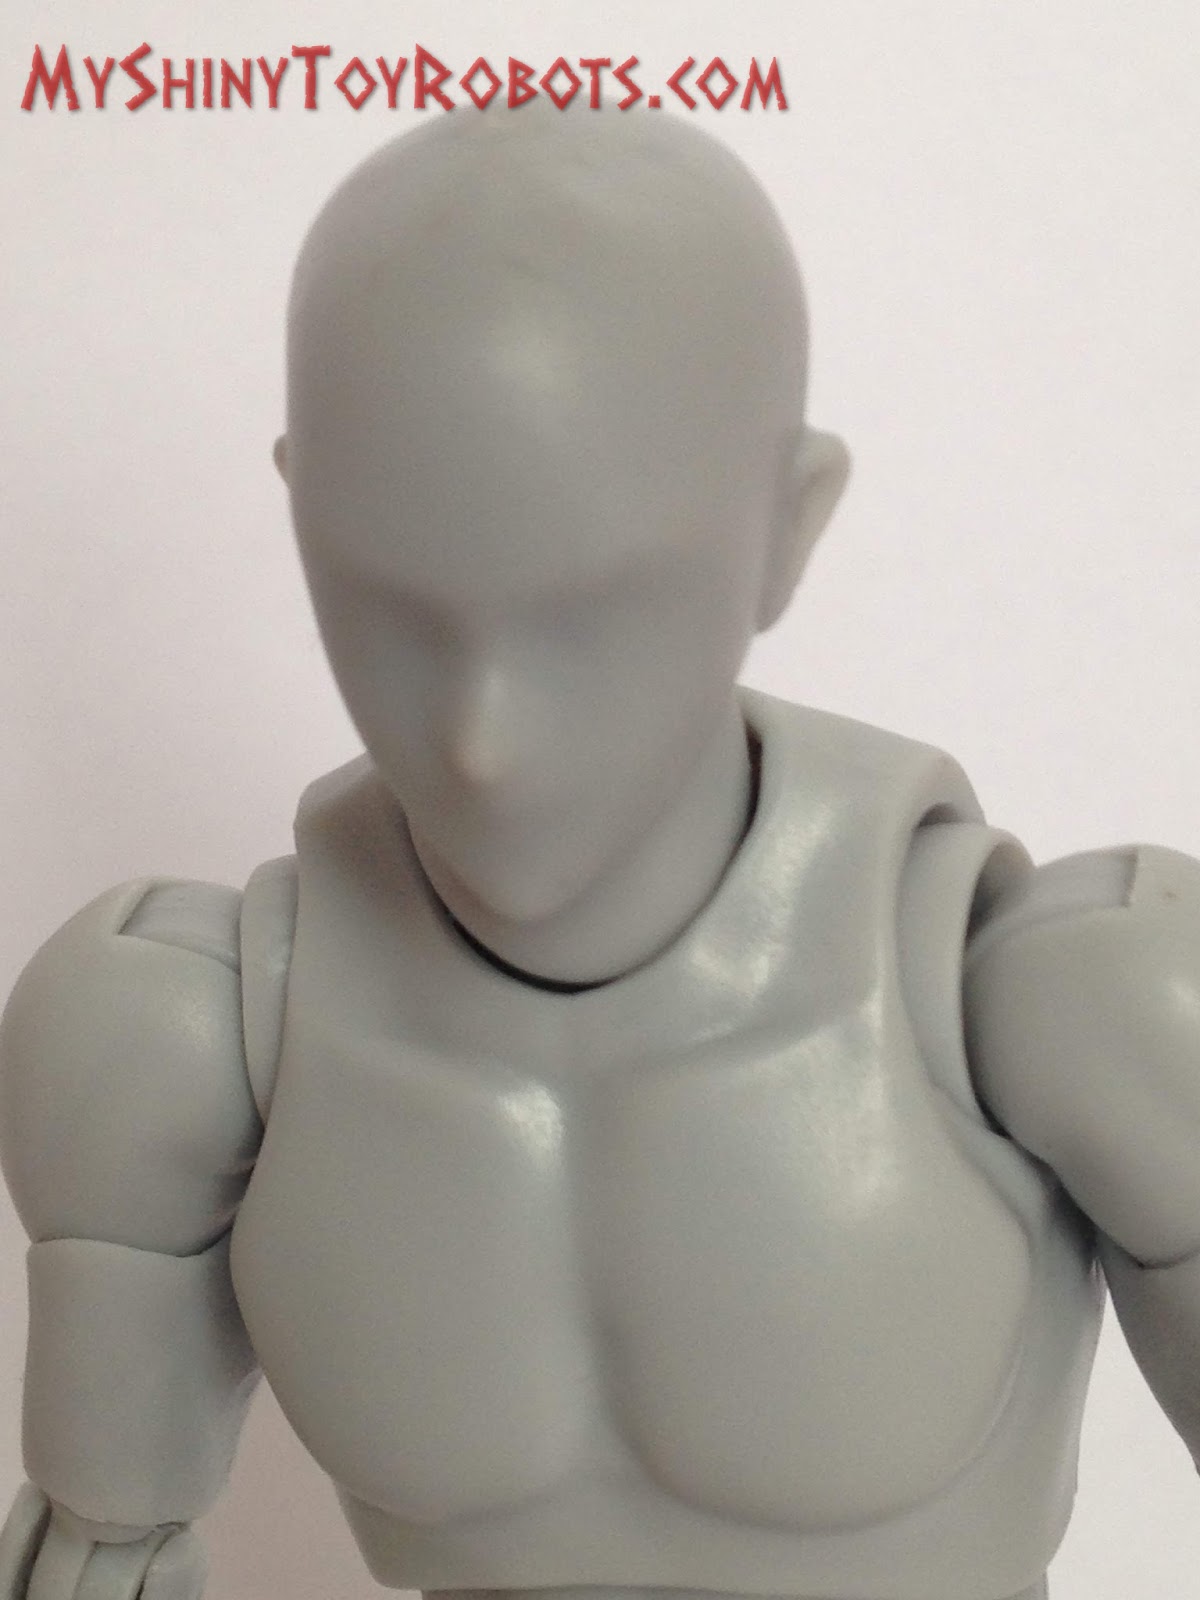 My Shiny Toy Robots: Toybox REVIEW: S.H. Figuarts Body-Kun DX Set